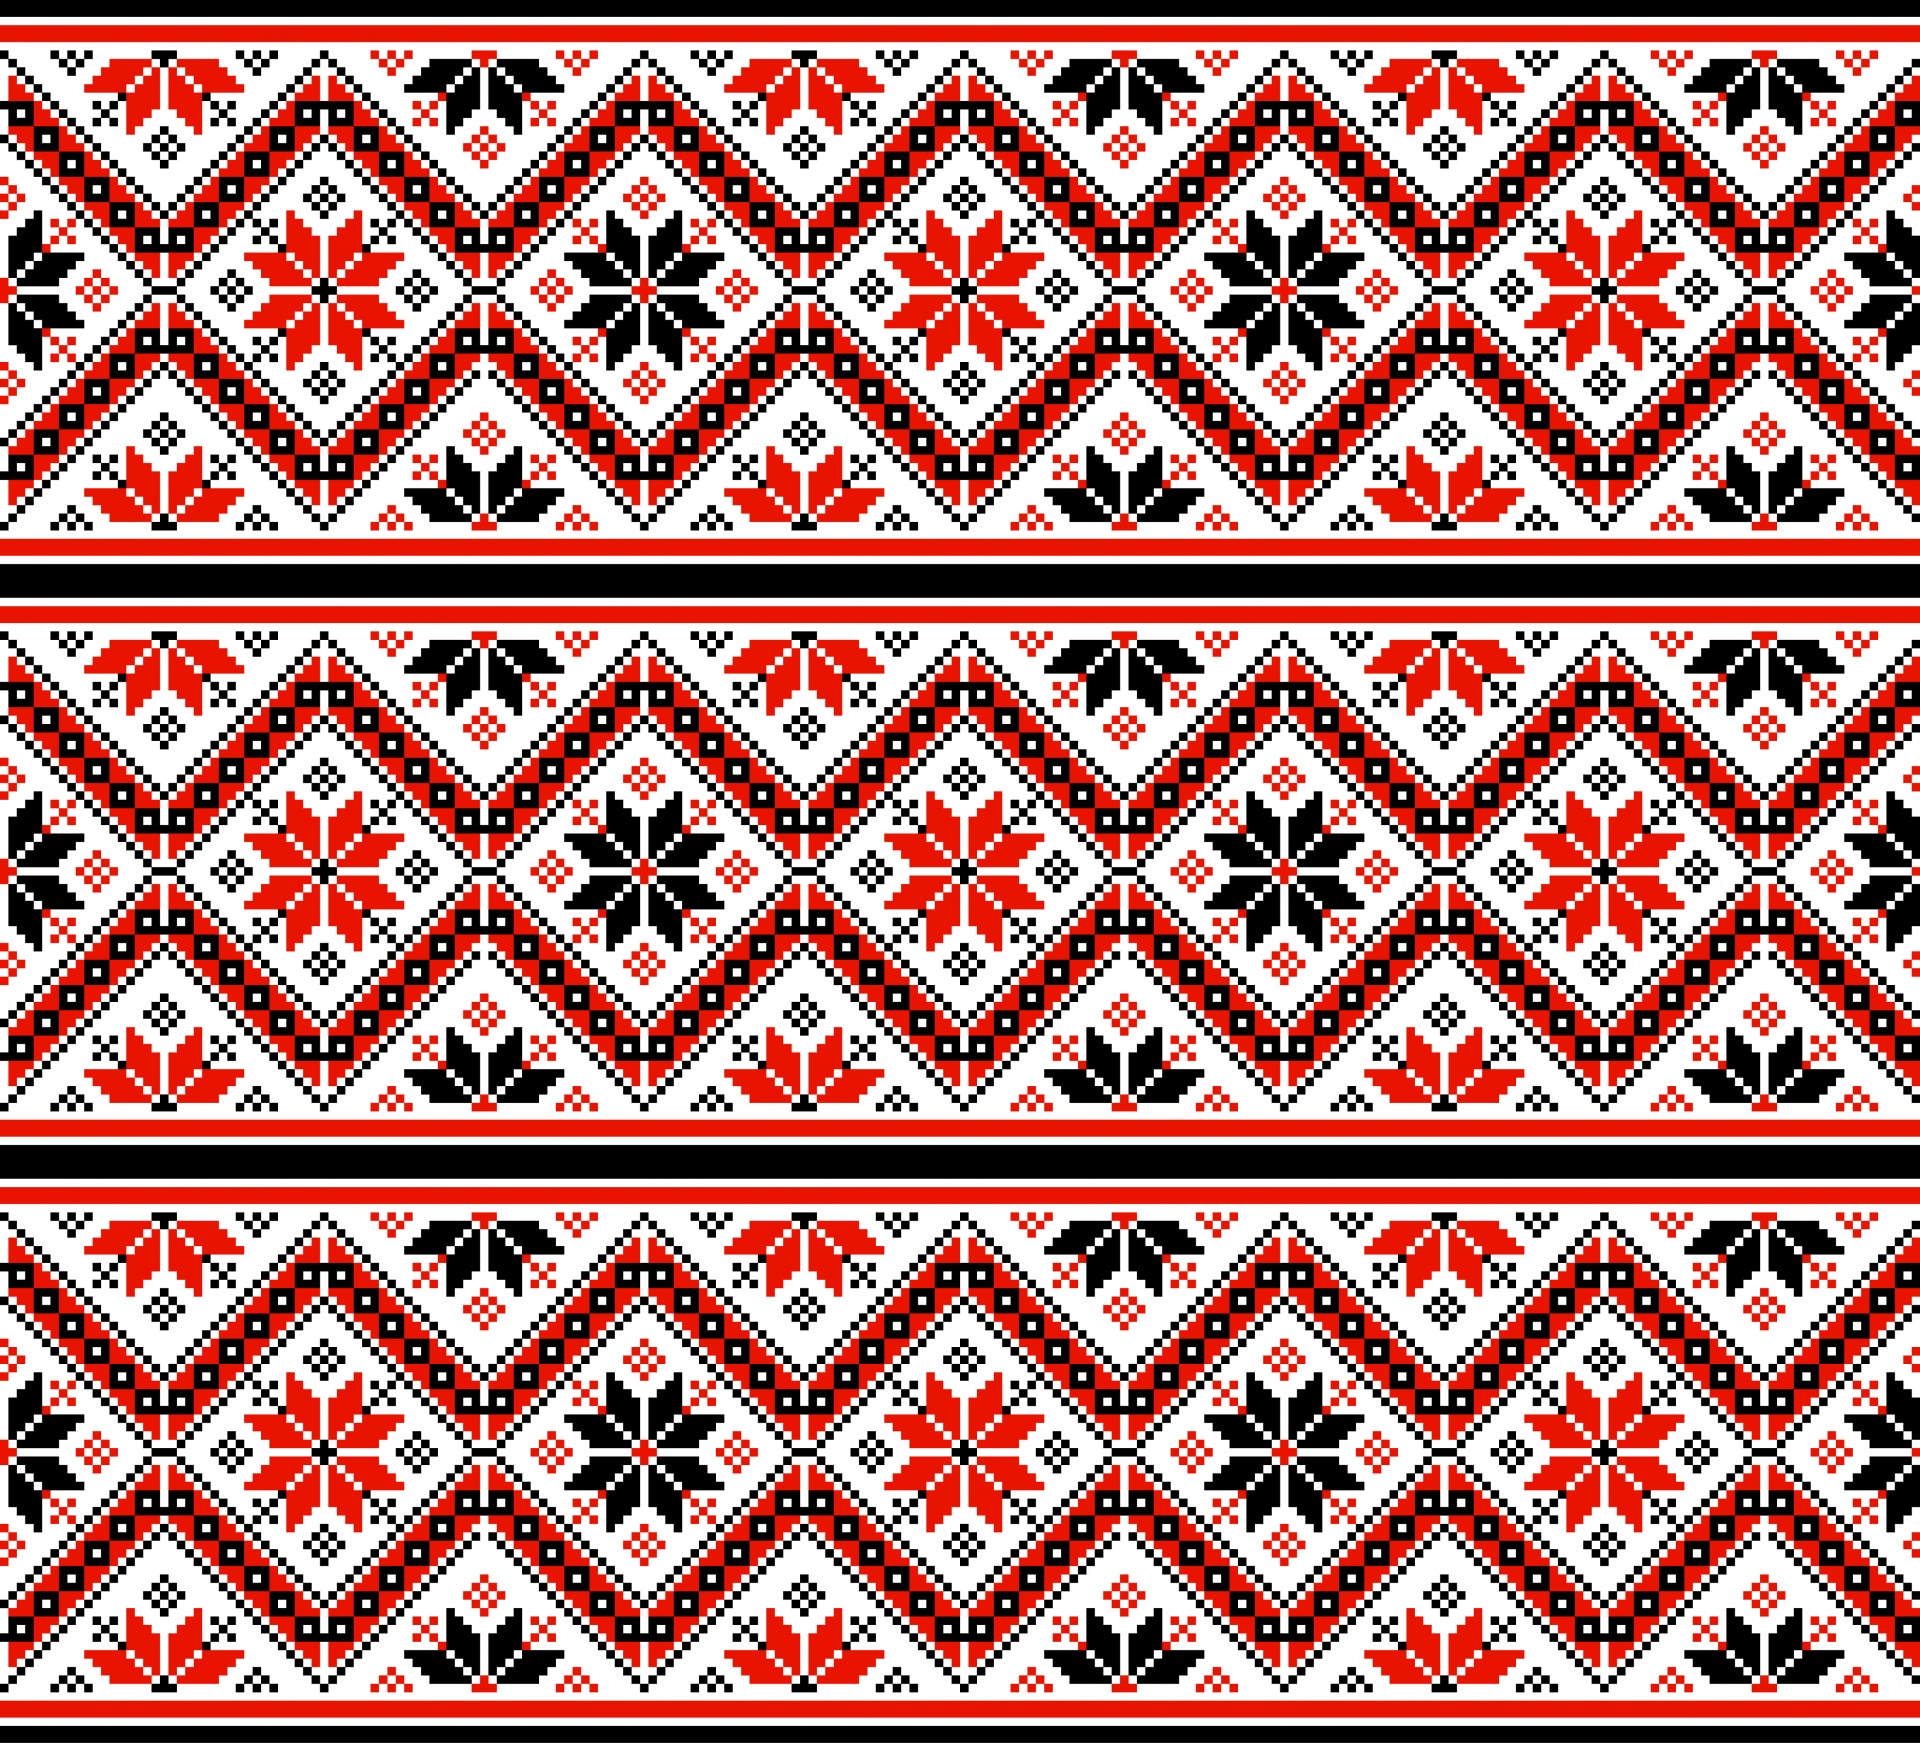 Folklore Ethnic Pattern Background